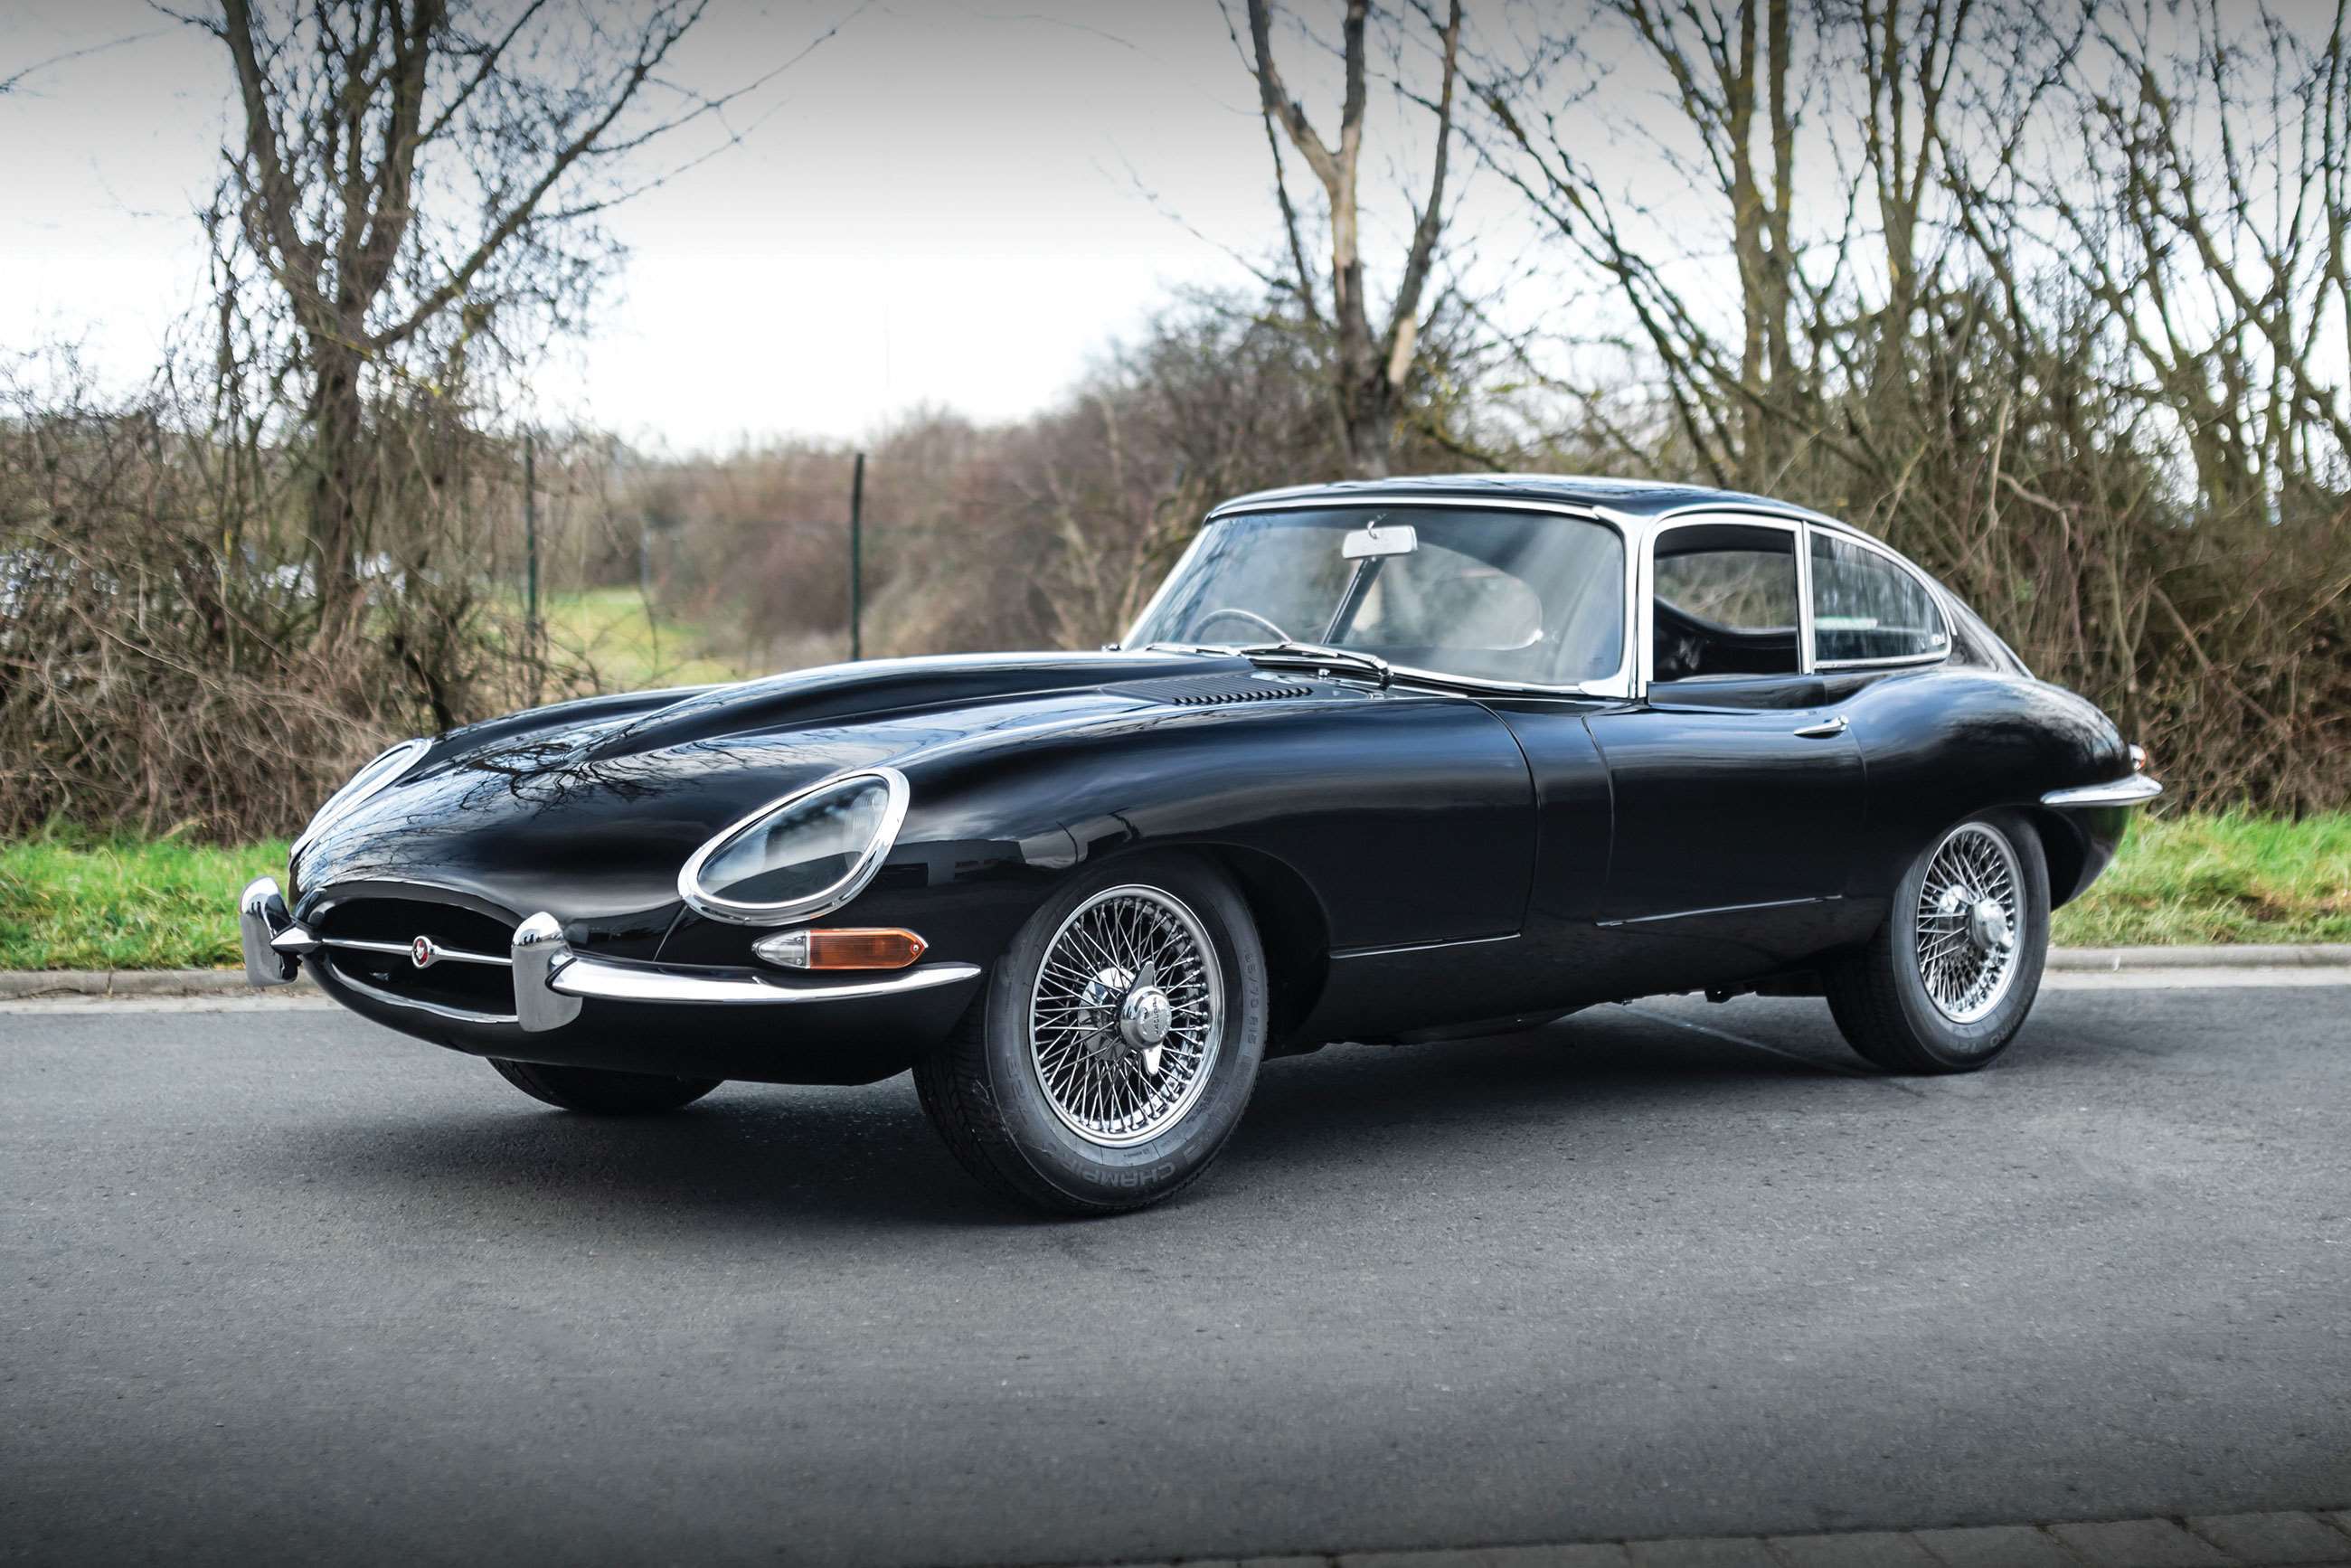 jaguar-e-type-series-i-3.8-litre-fixed-head-coupe-1963-petitjean-collection-rm-sothebys-goodwood-12062020.jpg